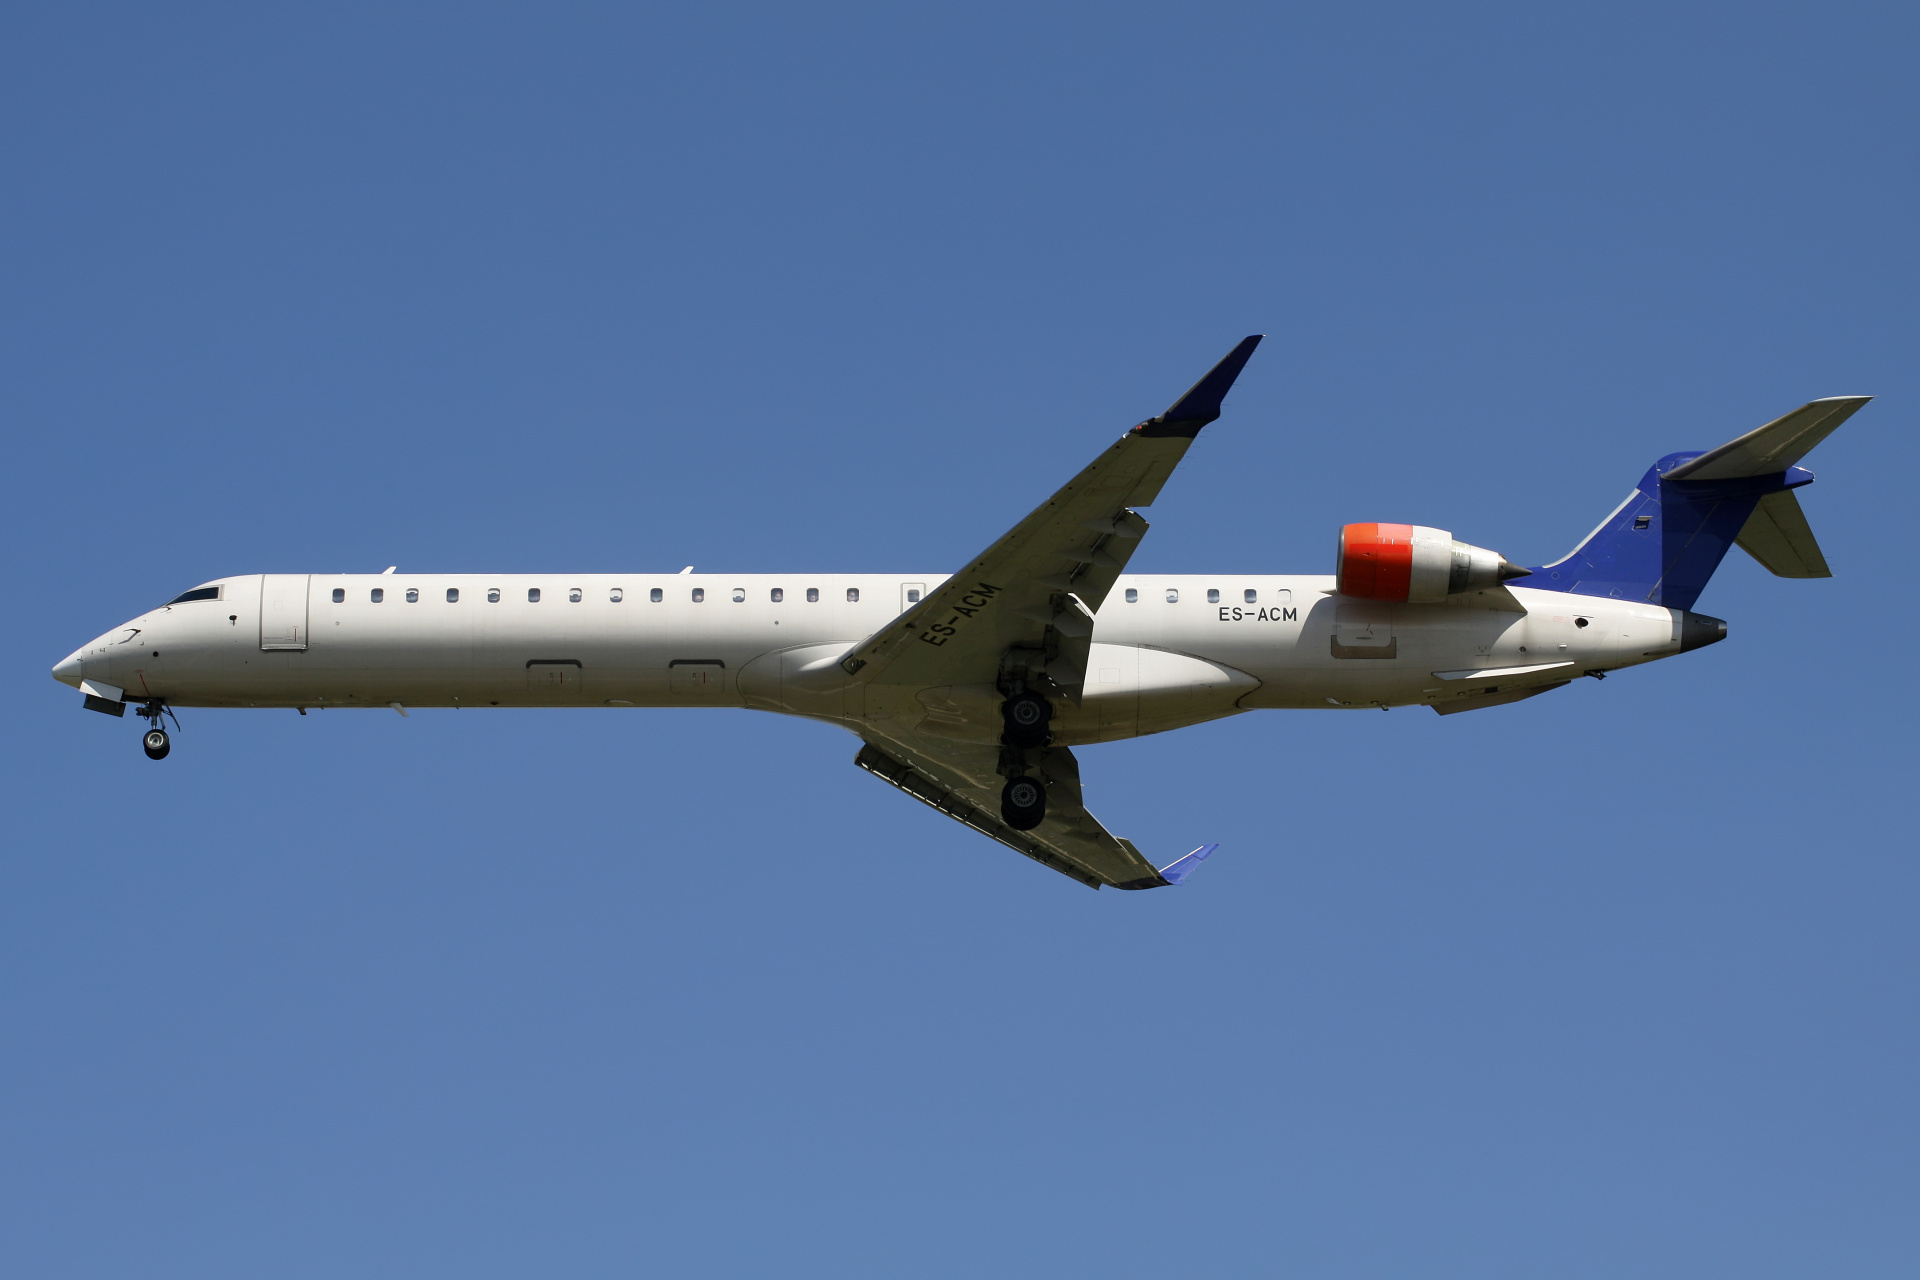 ES-ACM (SAS Scandinavian Airlines) (Aircraft » EPWA Spotting » Mitsubishi Regional Jet » CRJ-900 » Nordica)